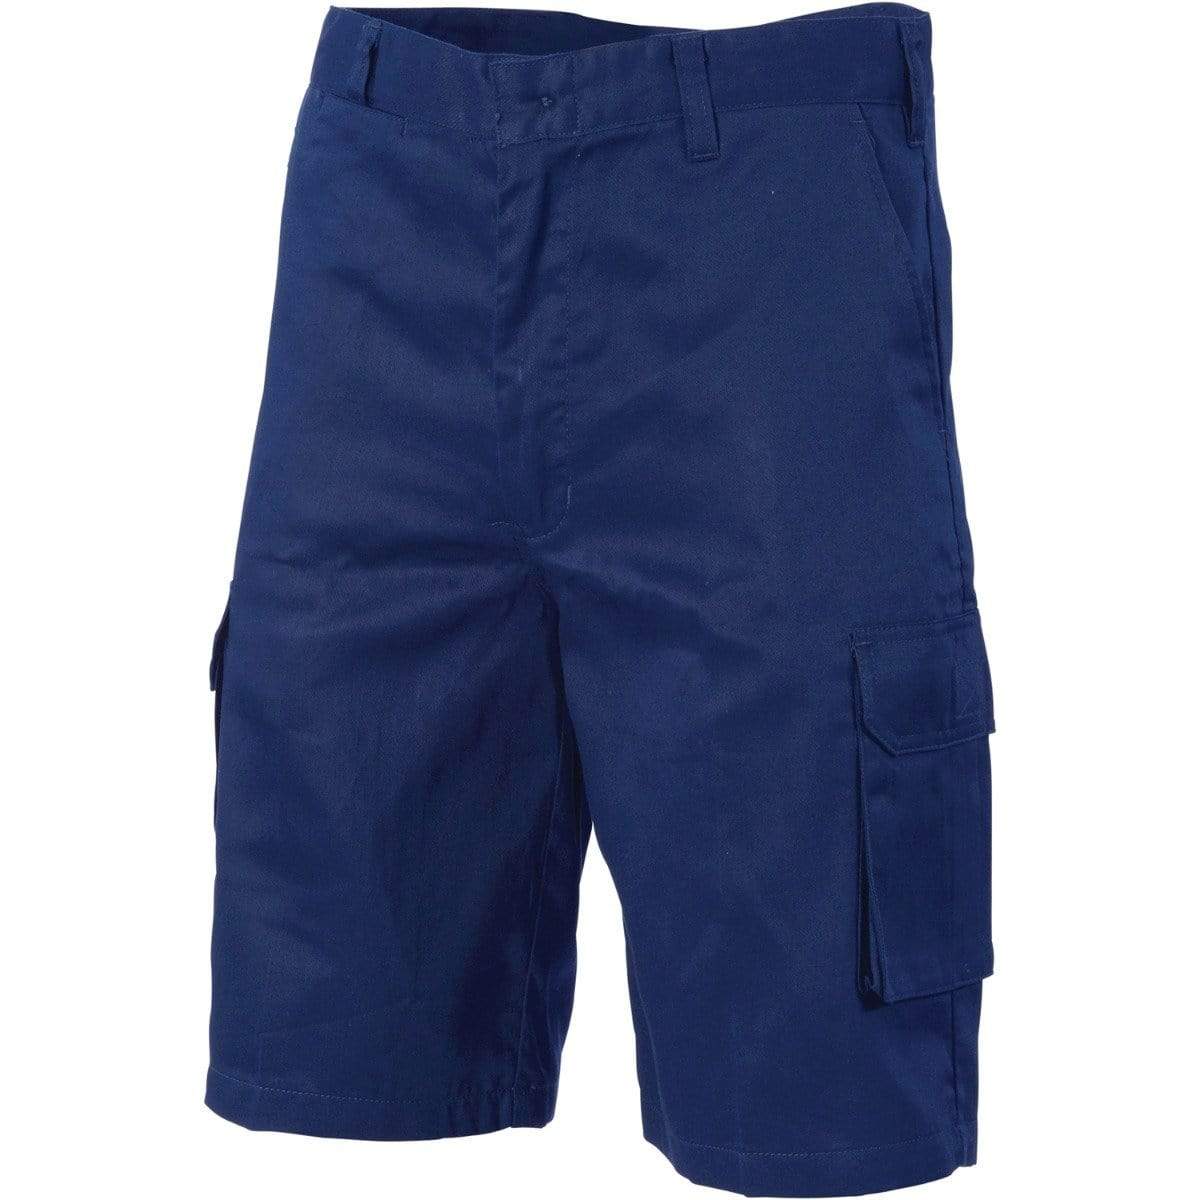 Dnc Workwear Middle Weight Cool-breeze Cotton Cargo Shorts - 3310 Work Wear DNC Workwear Navy 72R 